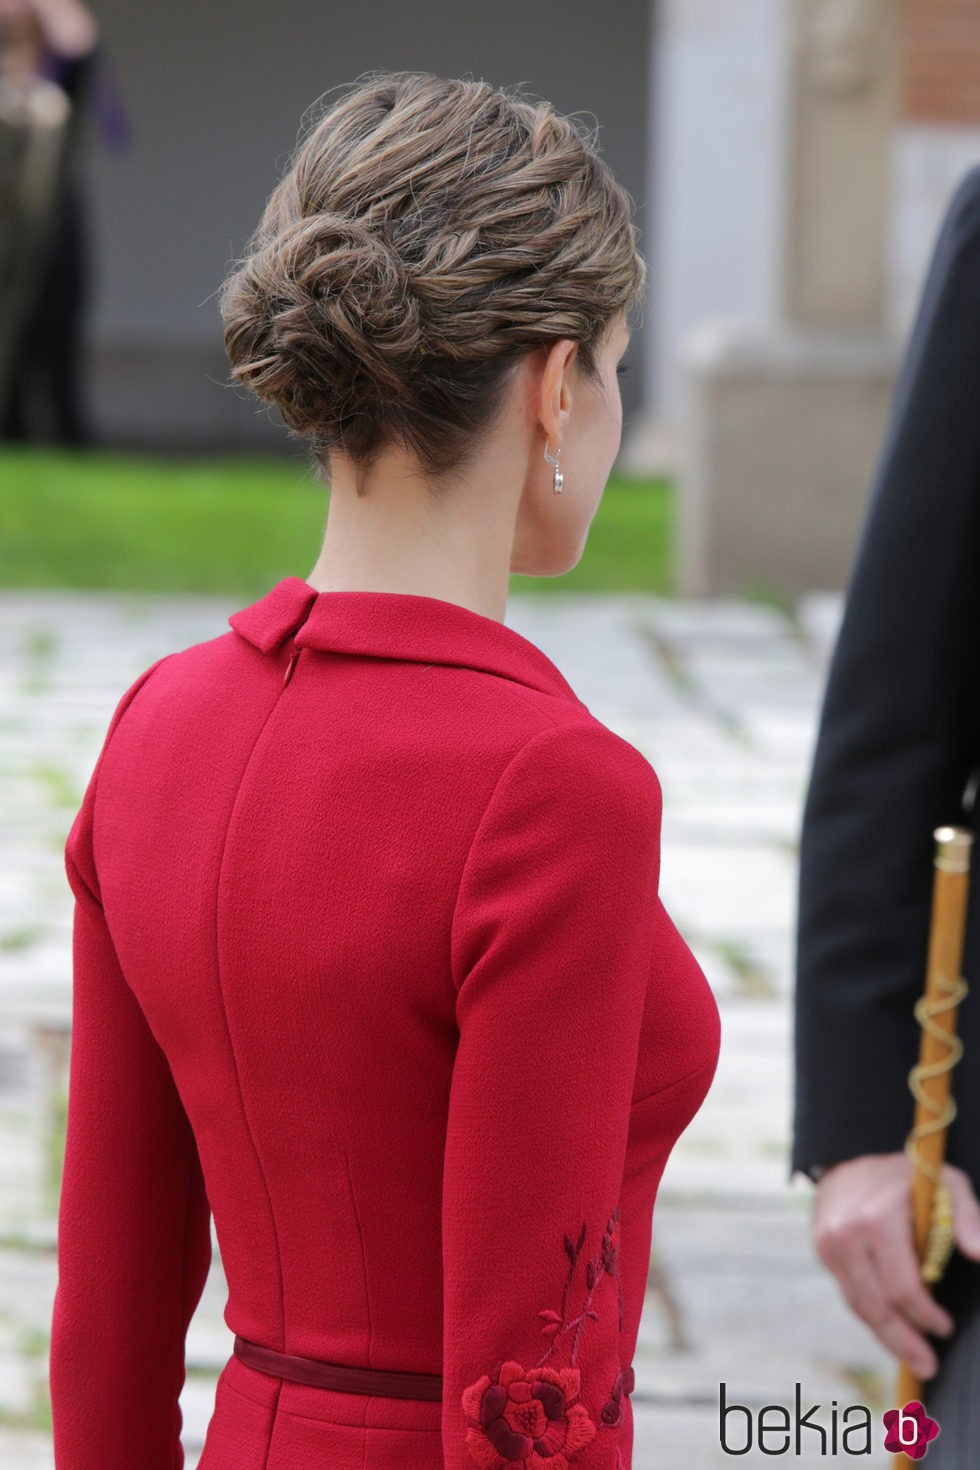 La Reina Letizia con un moño bajo postizo en la entrega del Premio Cervantes 2014